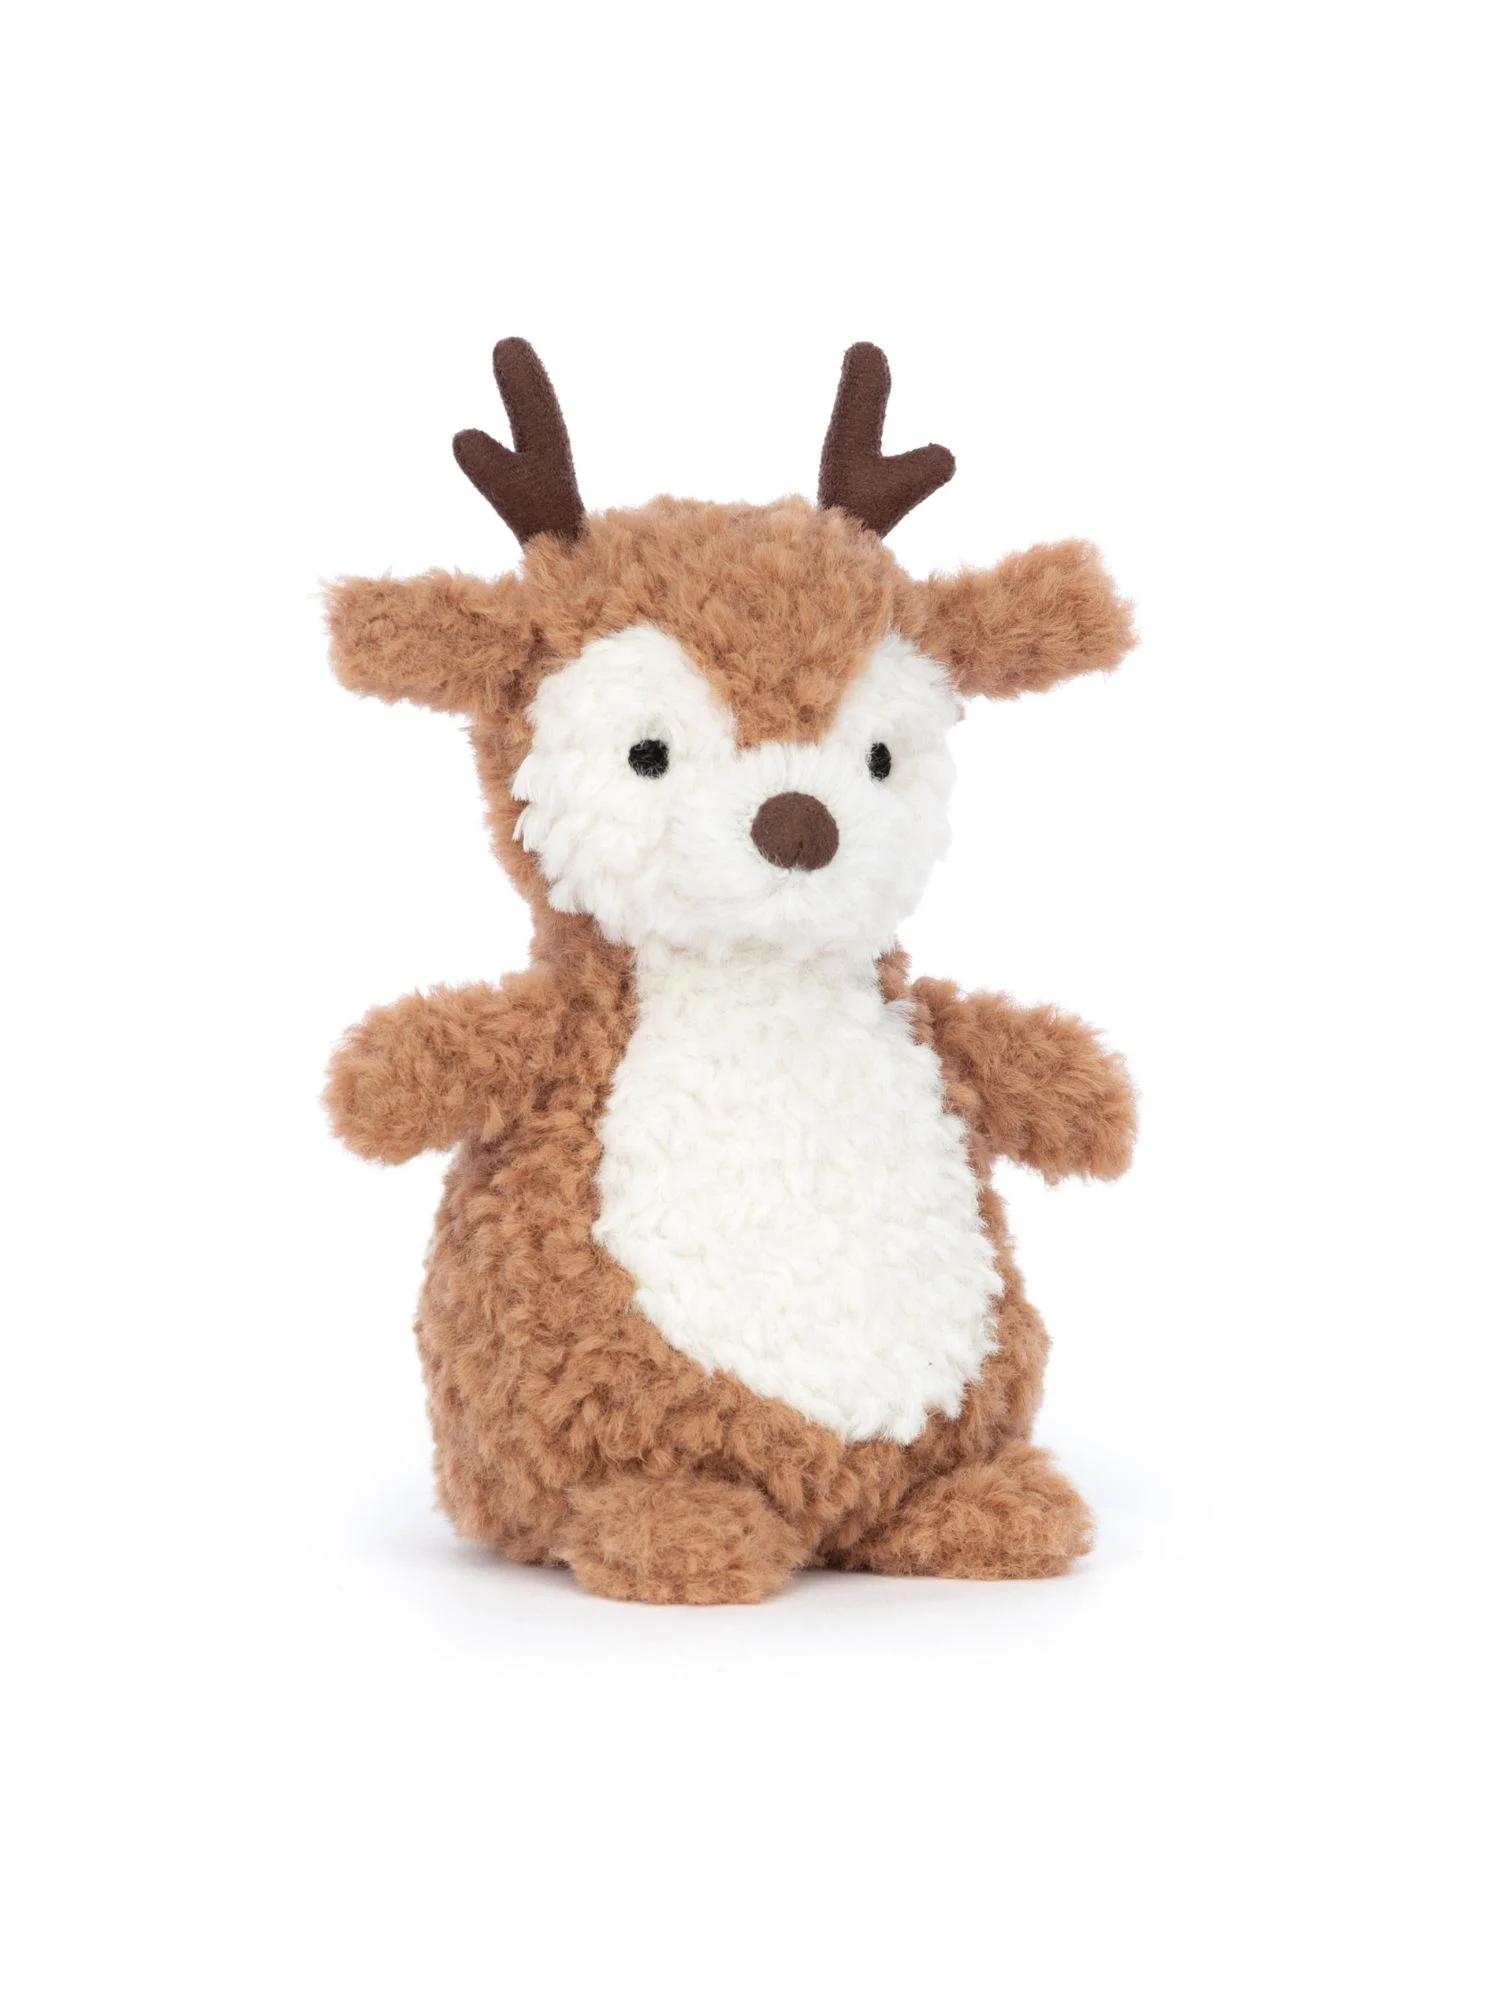  Wee mini reindeer plush 13 cm
  